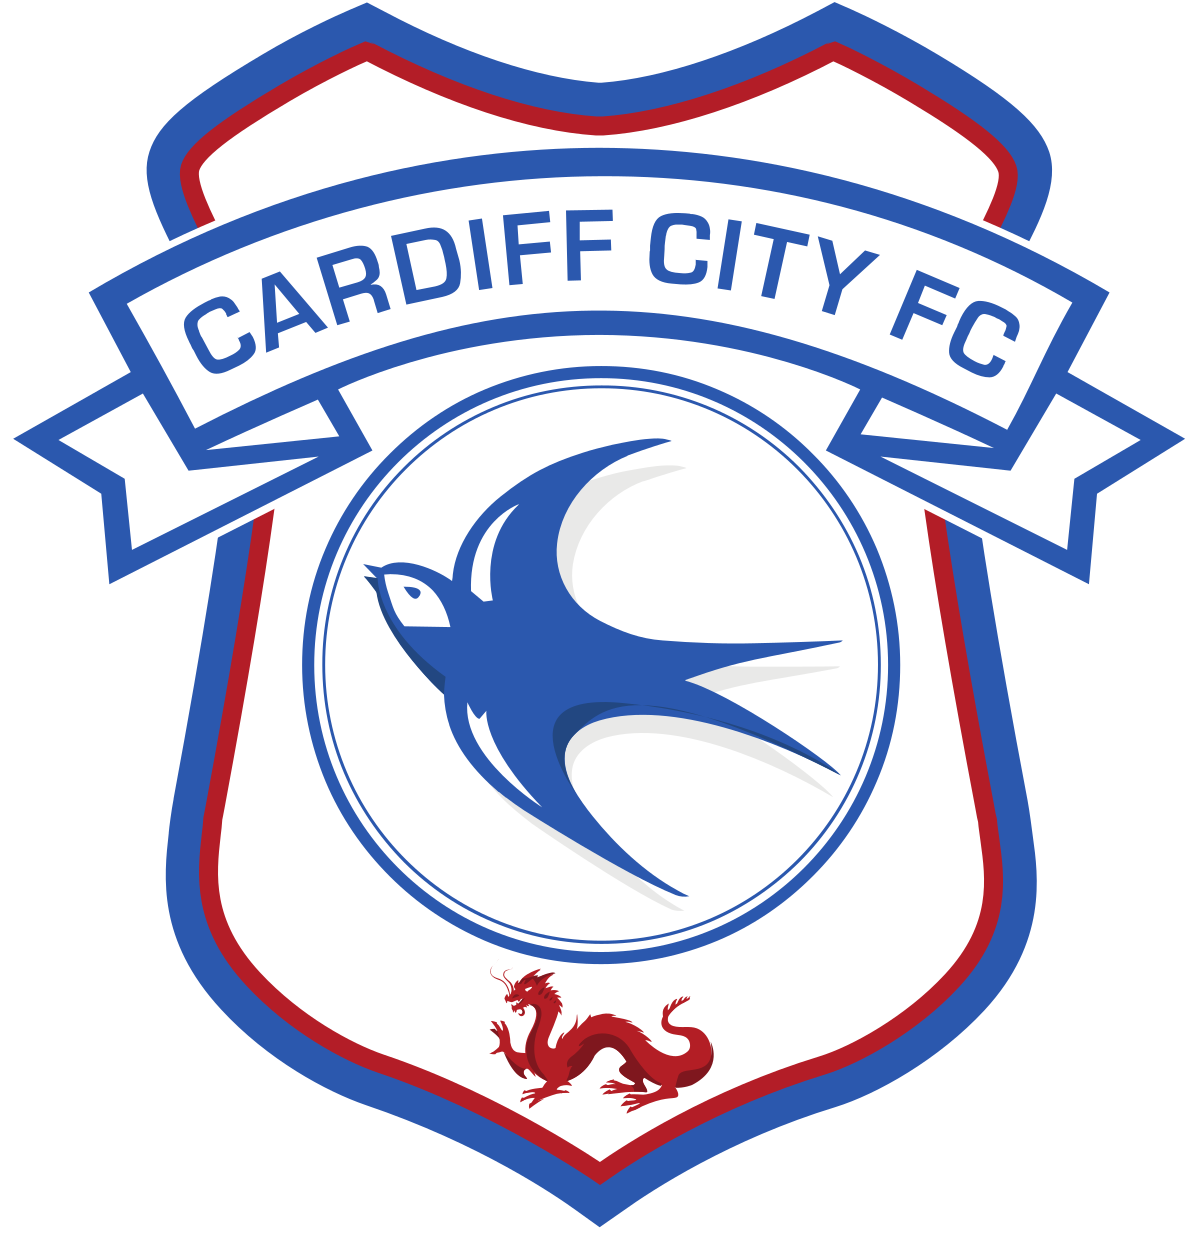 Cardiff City F.C. - Wikipedia bahasa Indonesia, ensiklopedia bebas